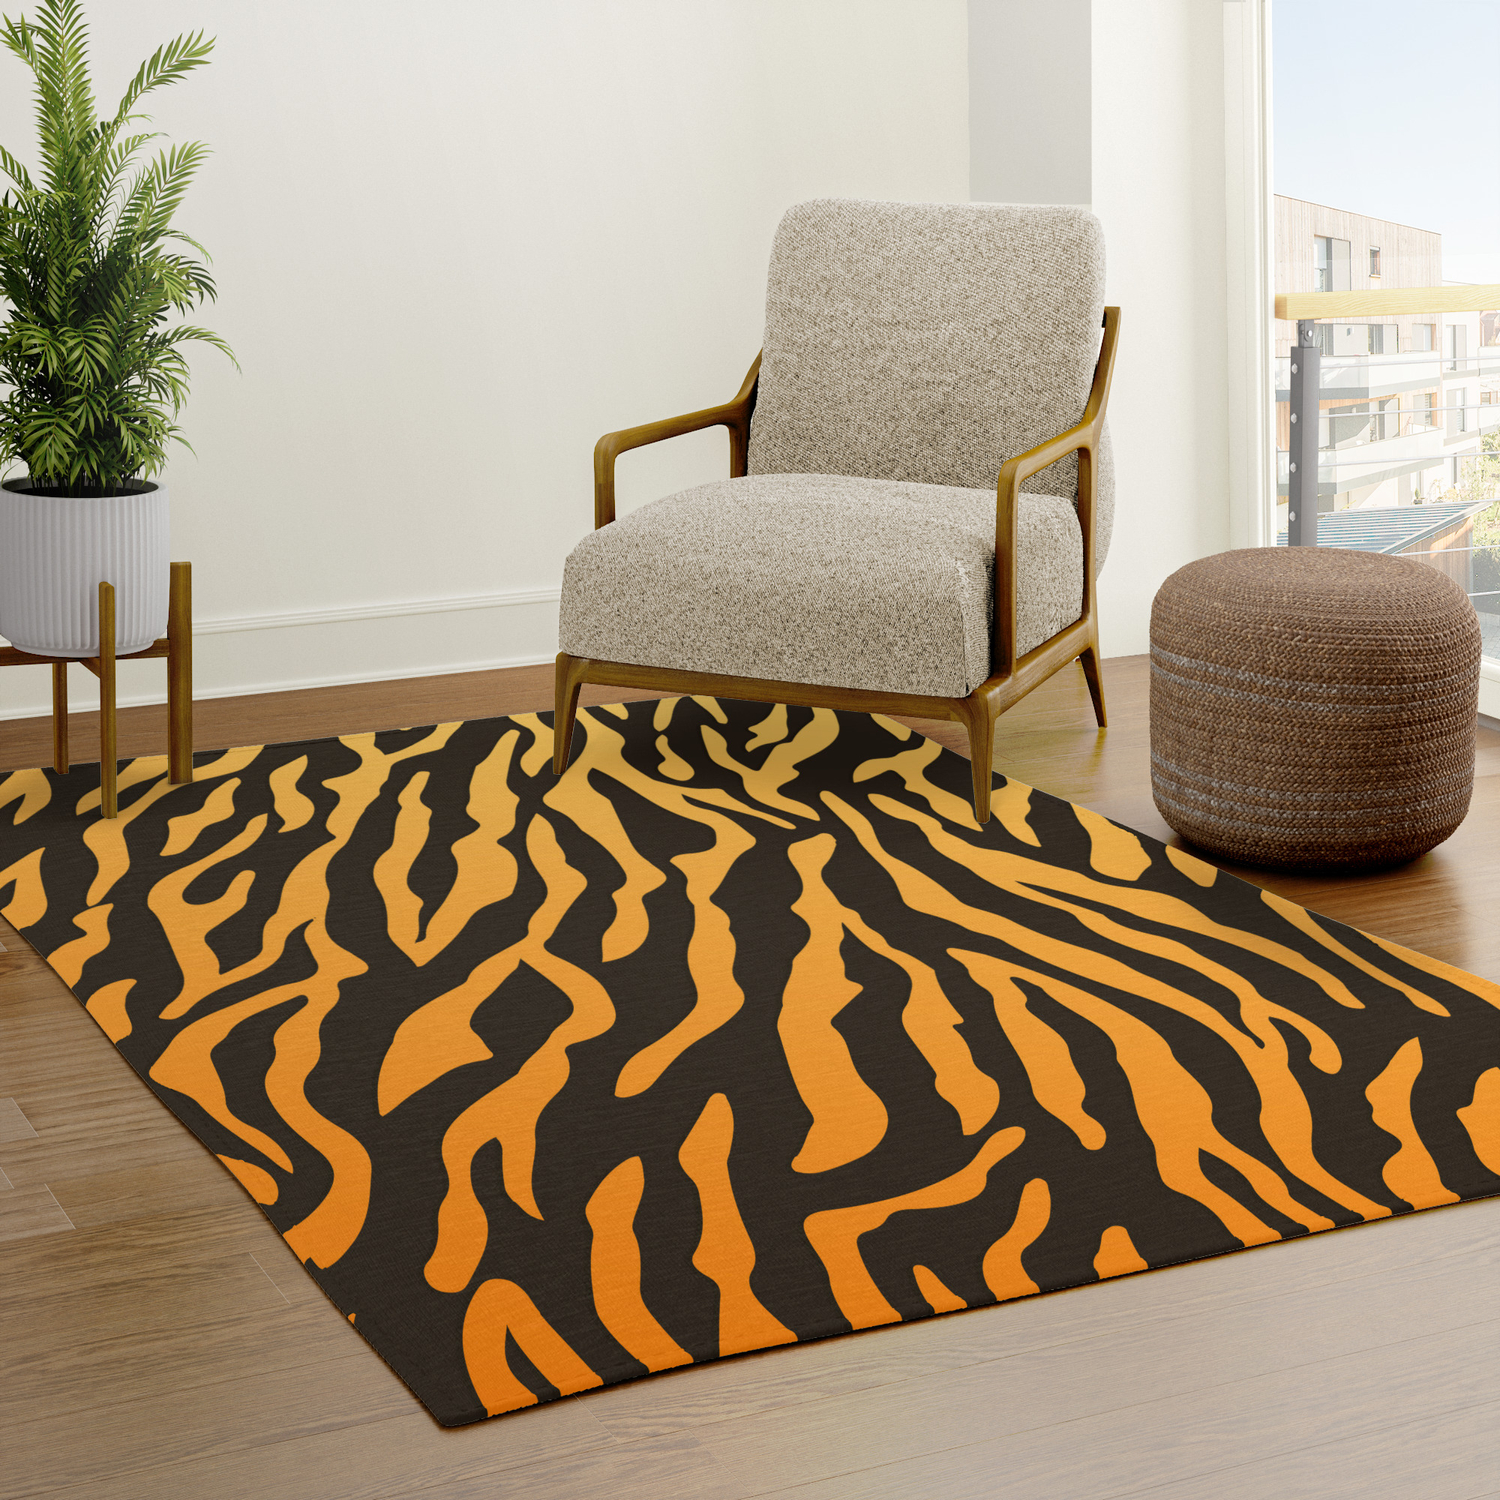 Tiger stripes animal print pattern Rug by Prizmatic | Society6